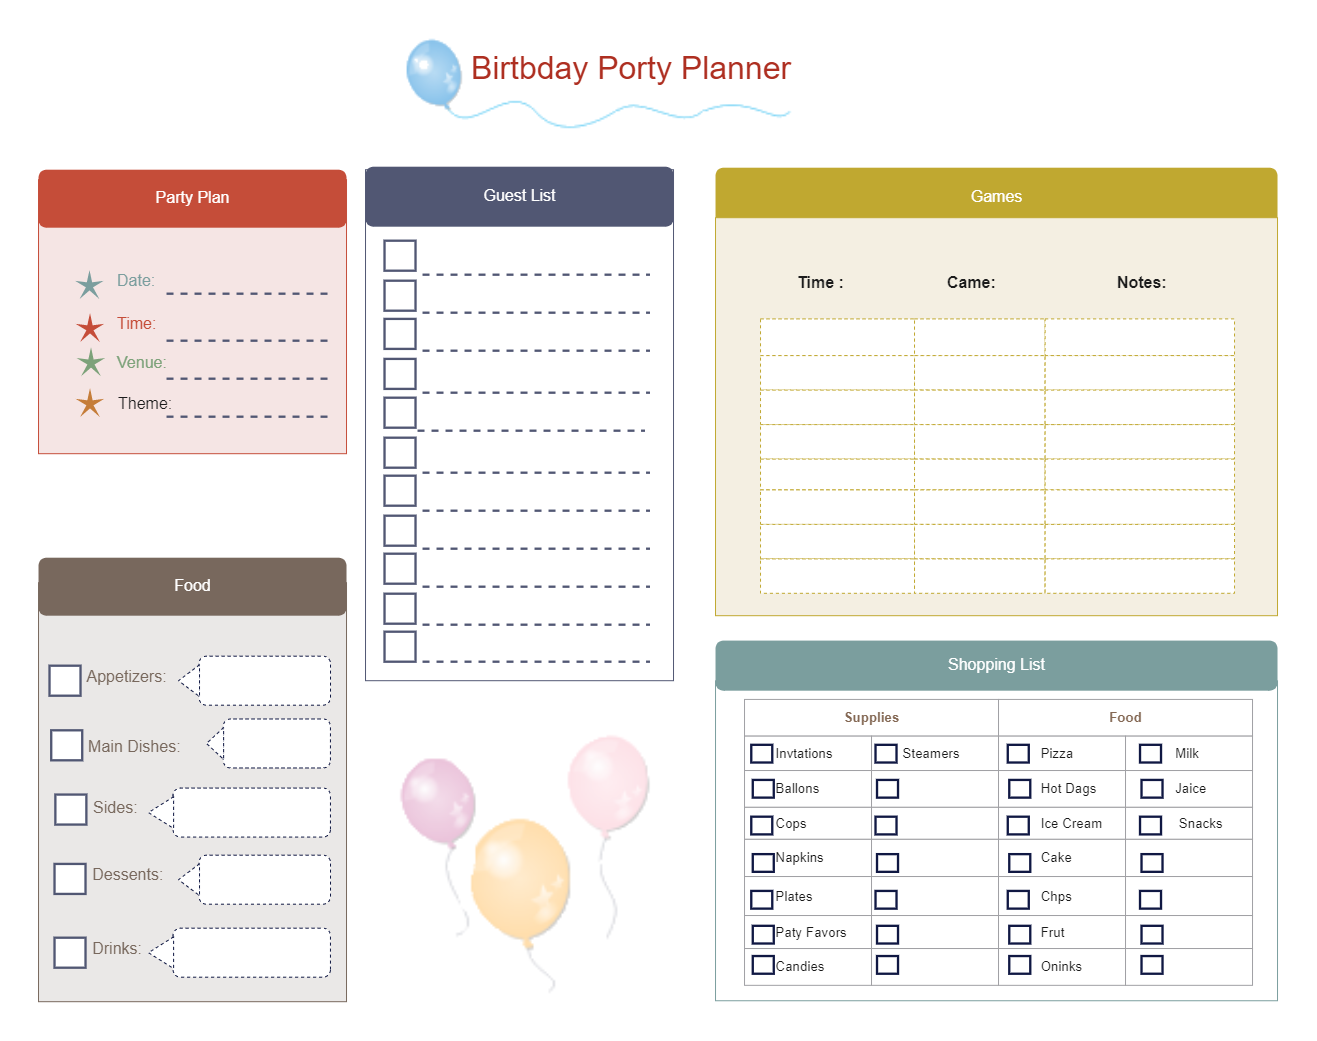 Birthday Party Planner